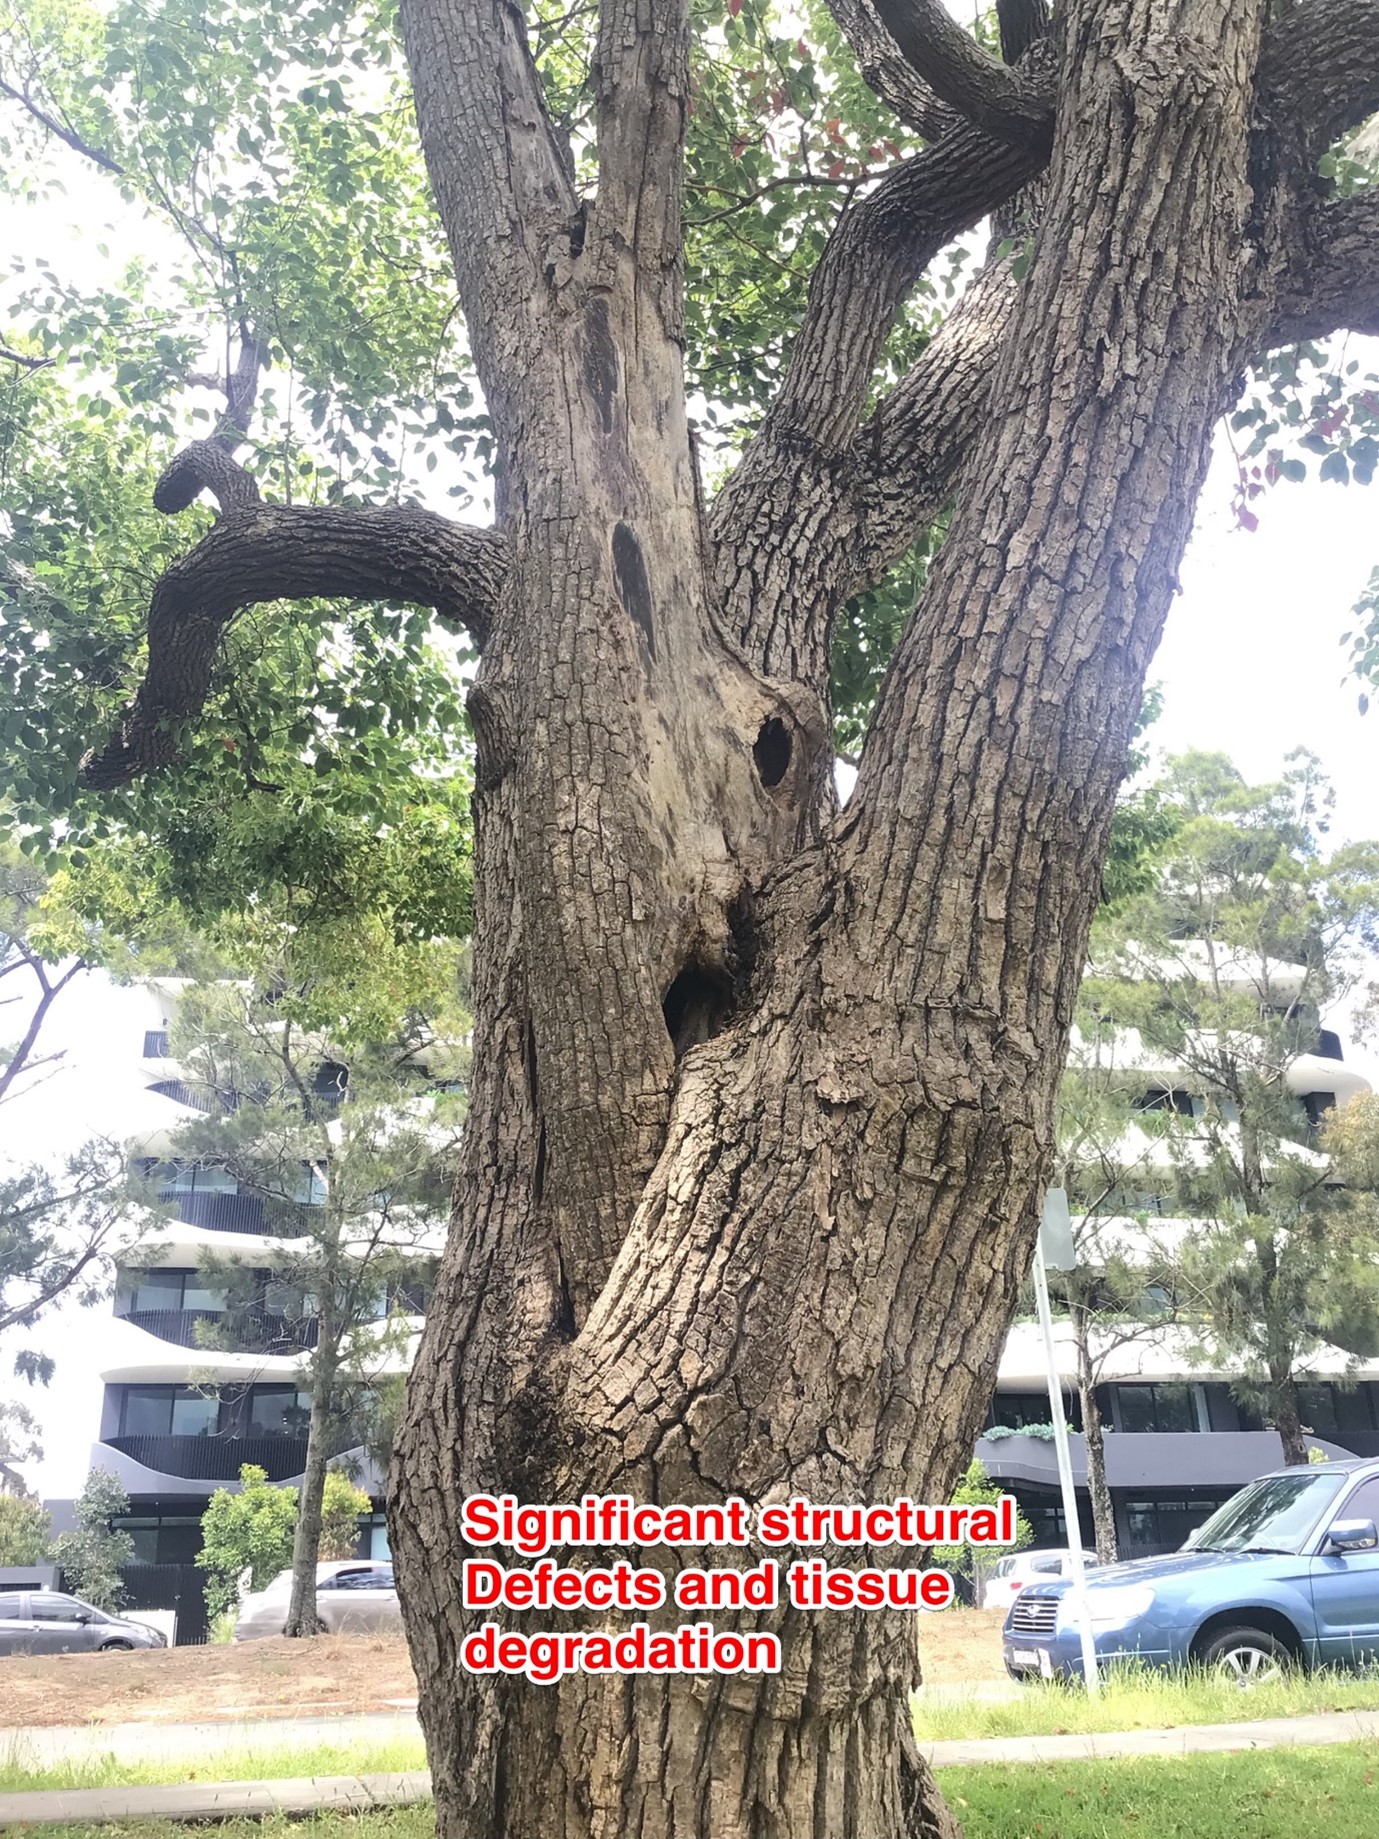 Camphor Laurel trees Miranda example structural defects tissue